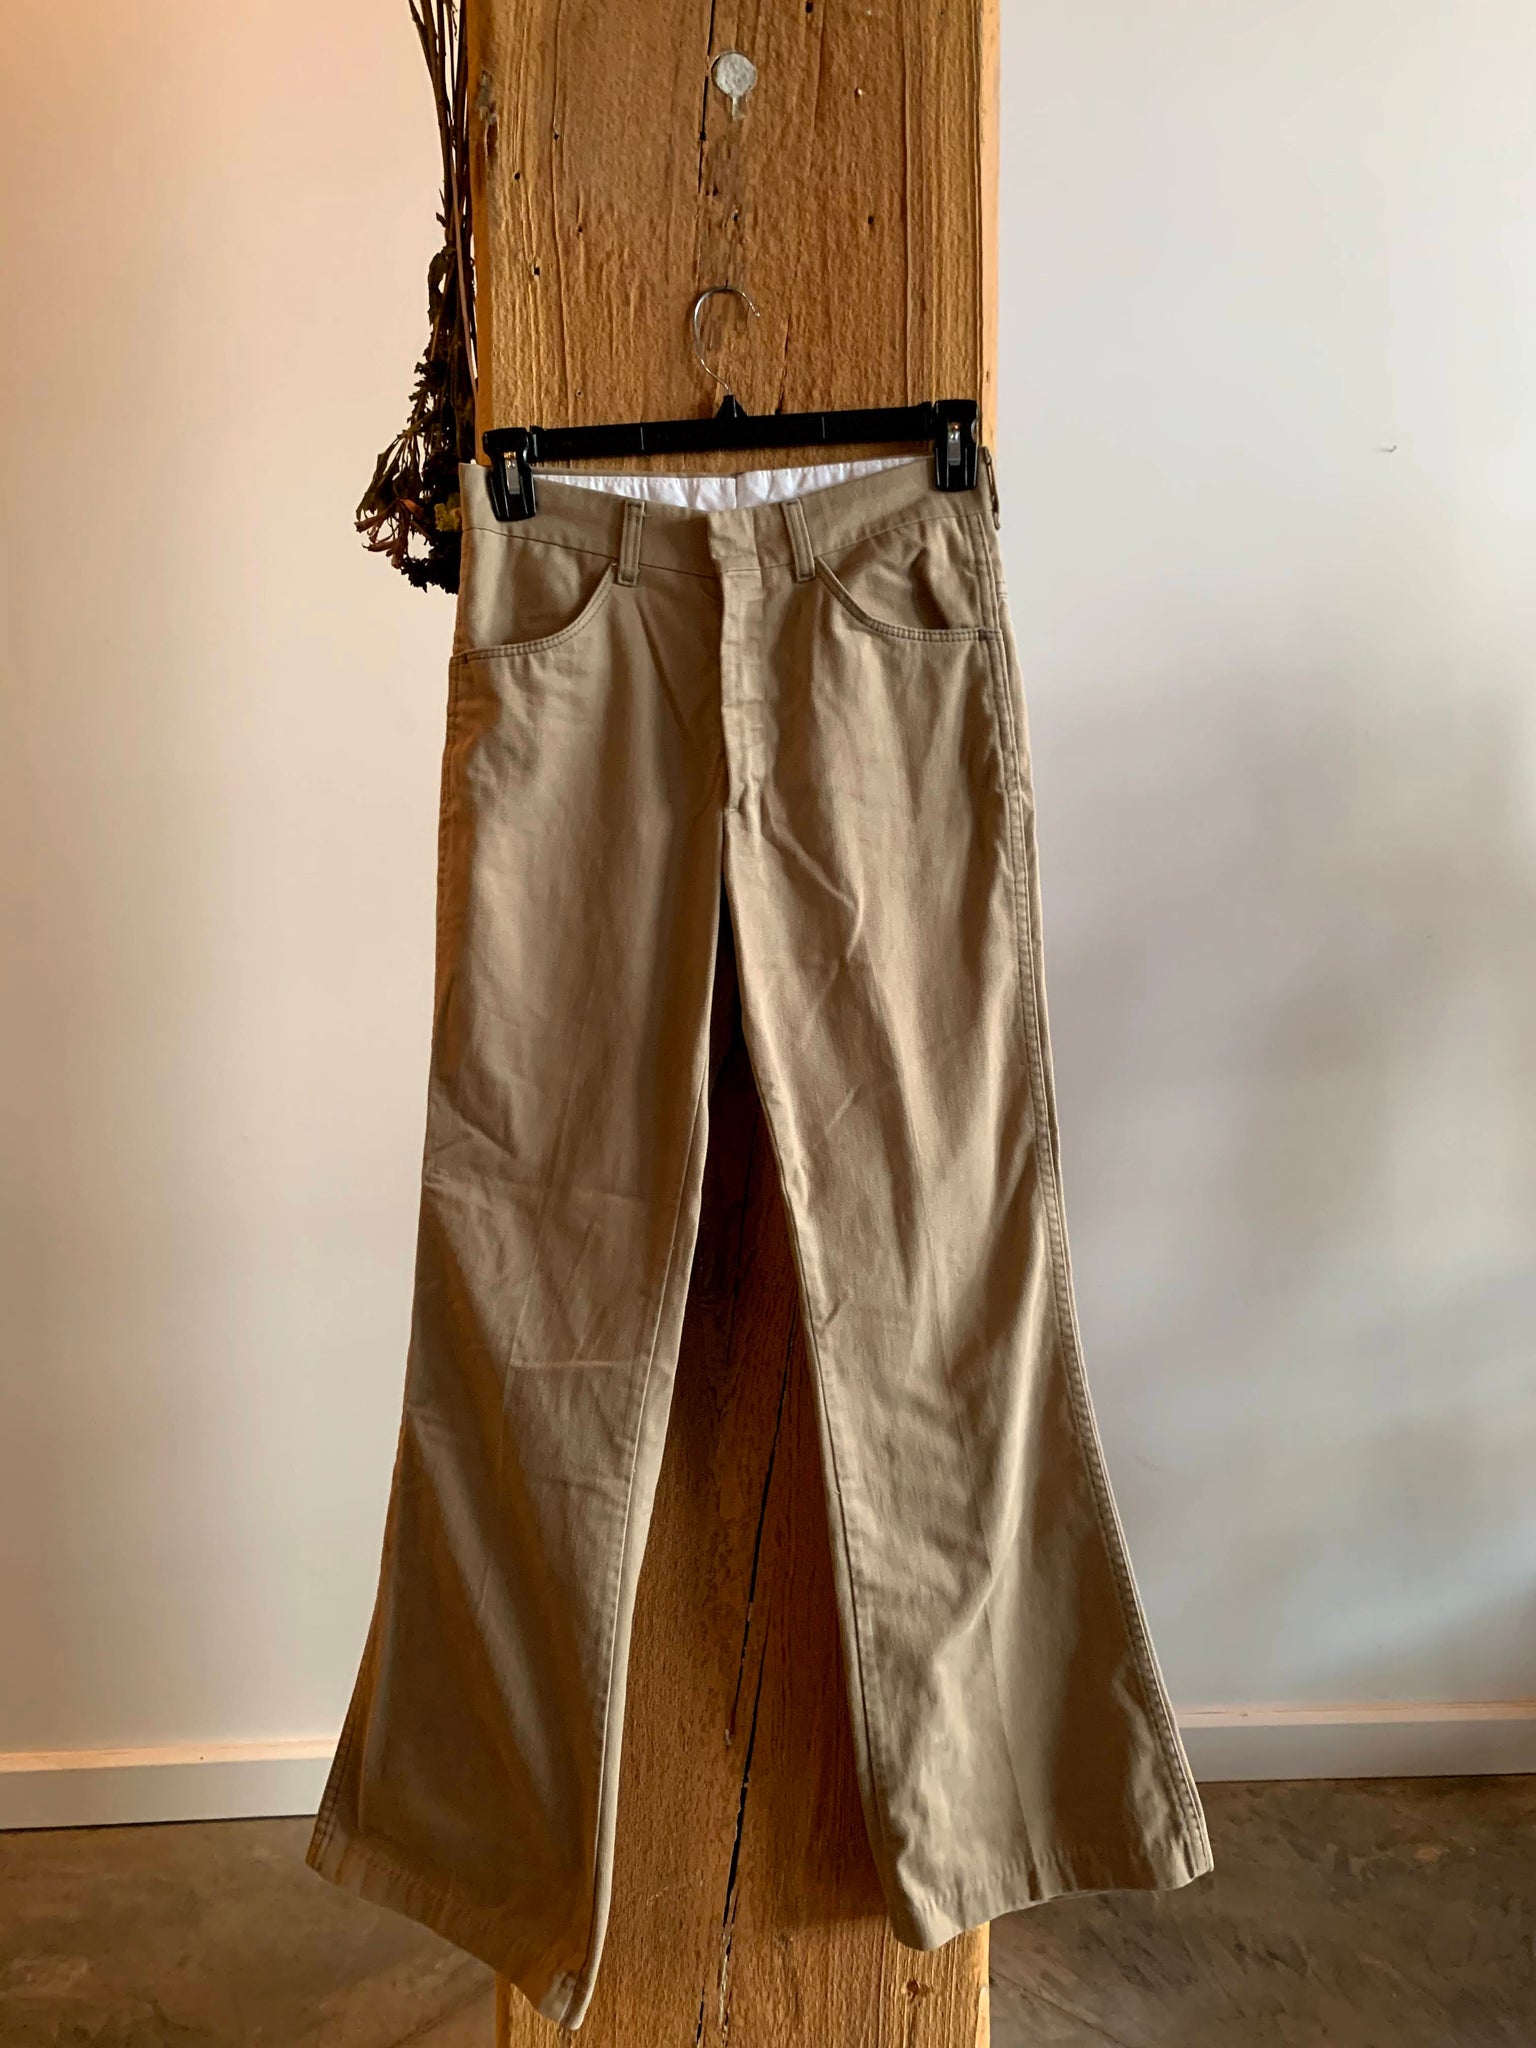 Vintage 60's-70's Farah High Waisted Pants